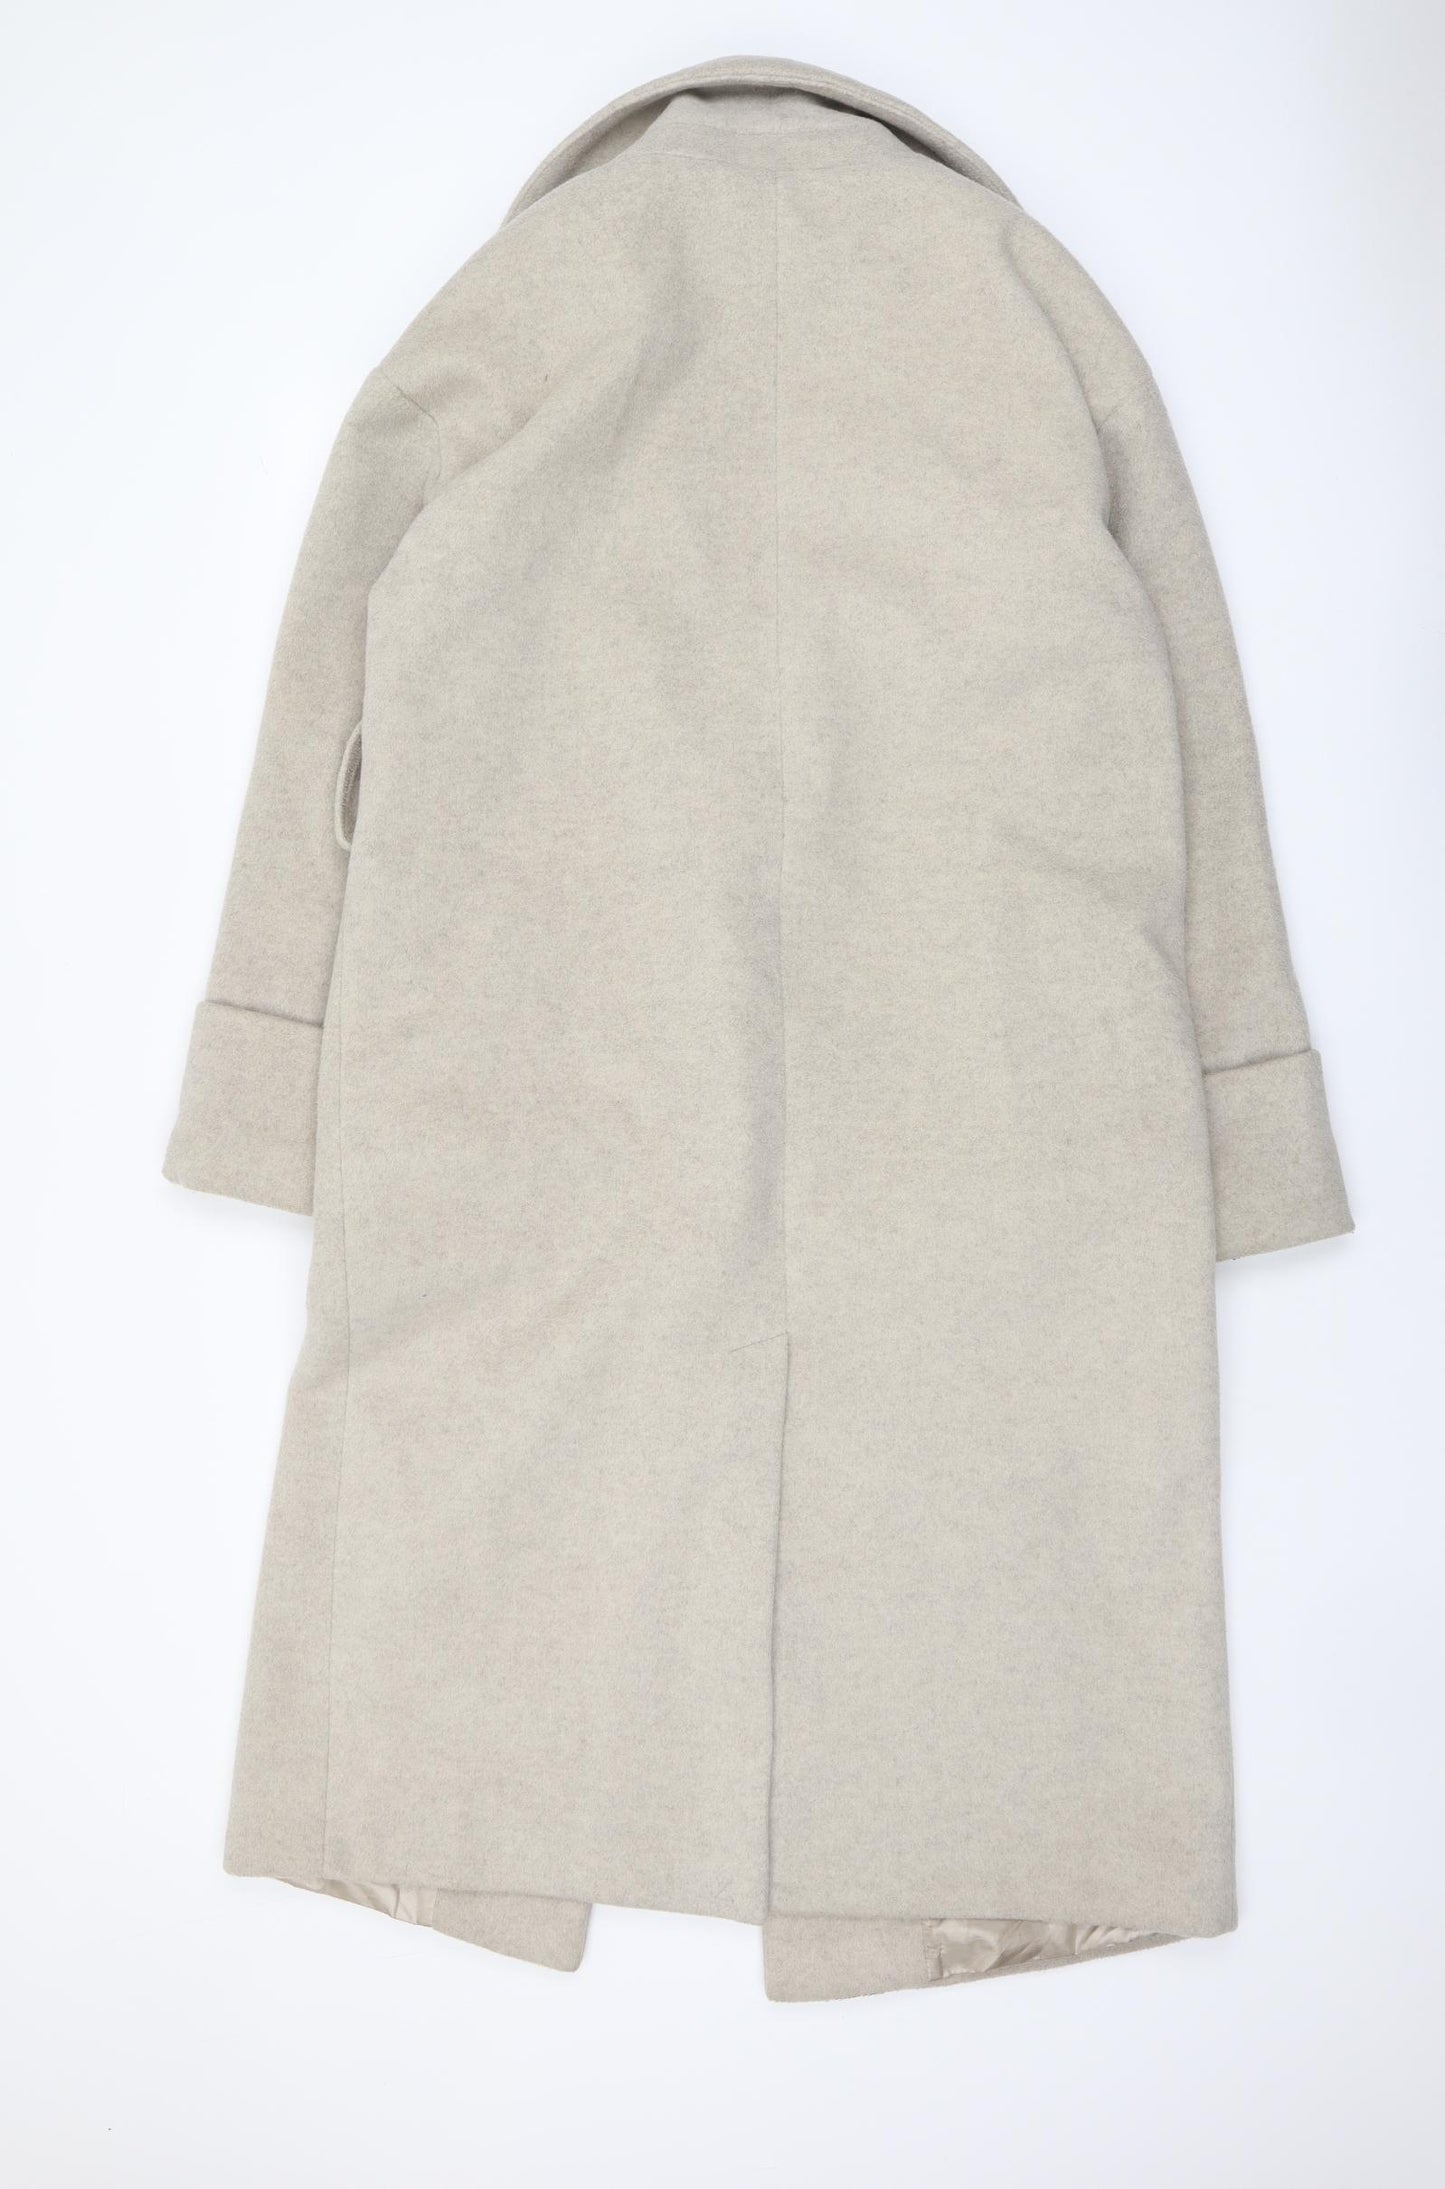 River Island Womens Beige Overcoat Coat Size 10 Snap